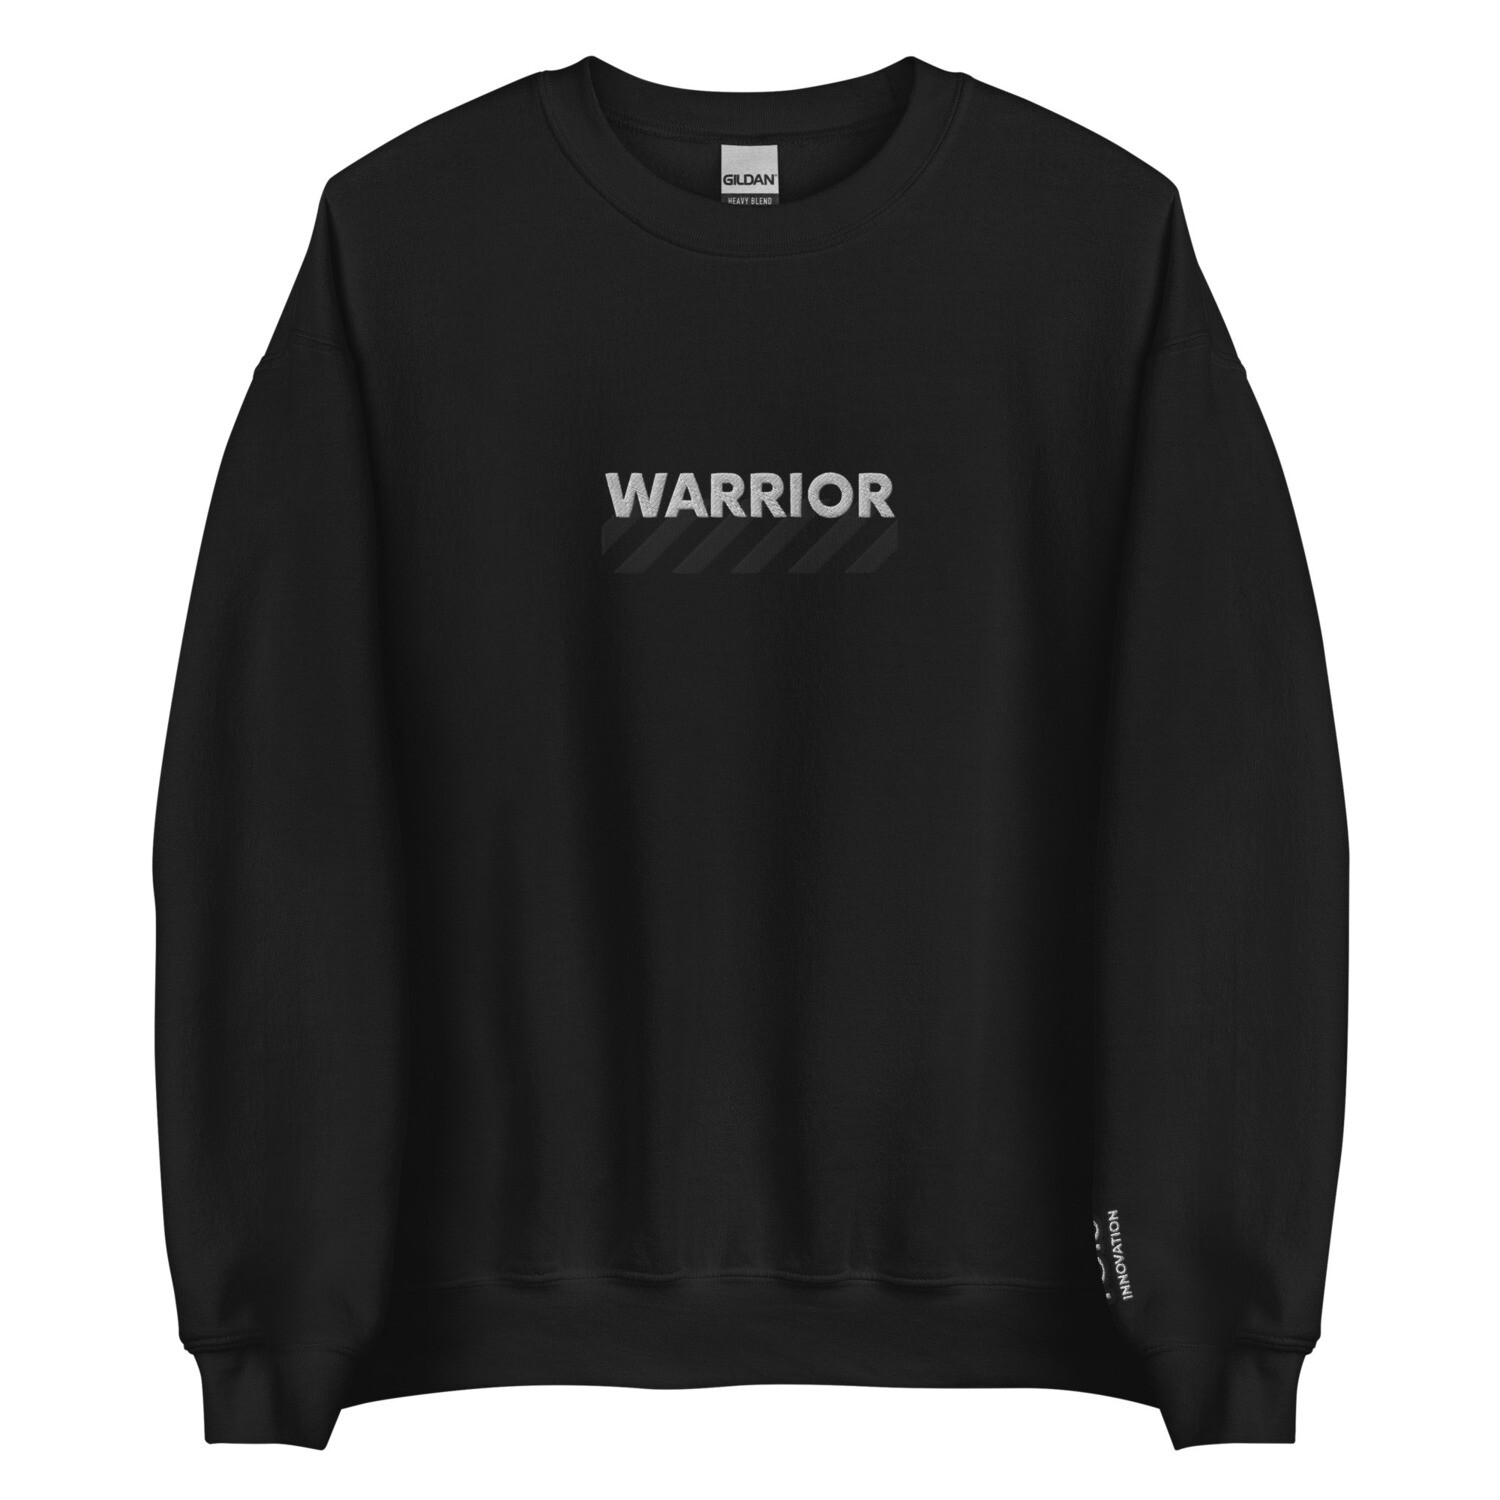 Black Warrior Sweatshirt